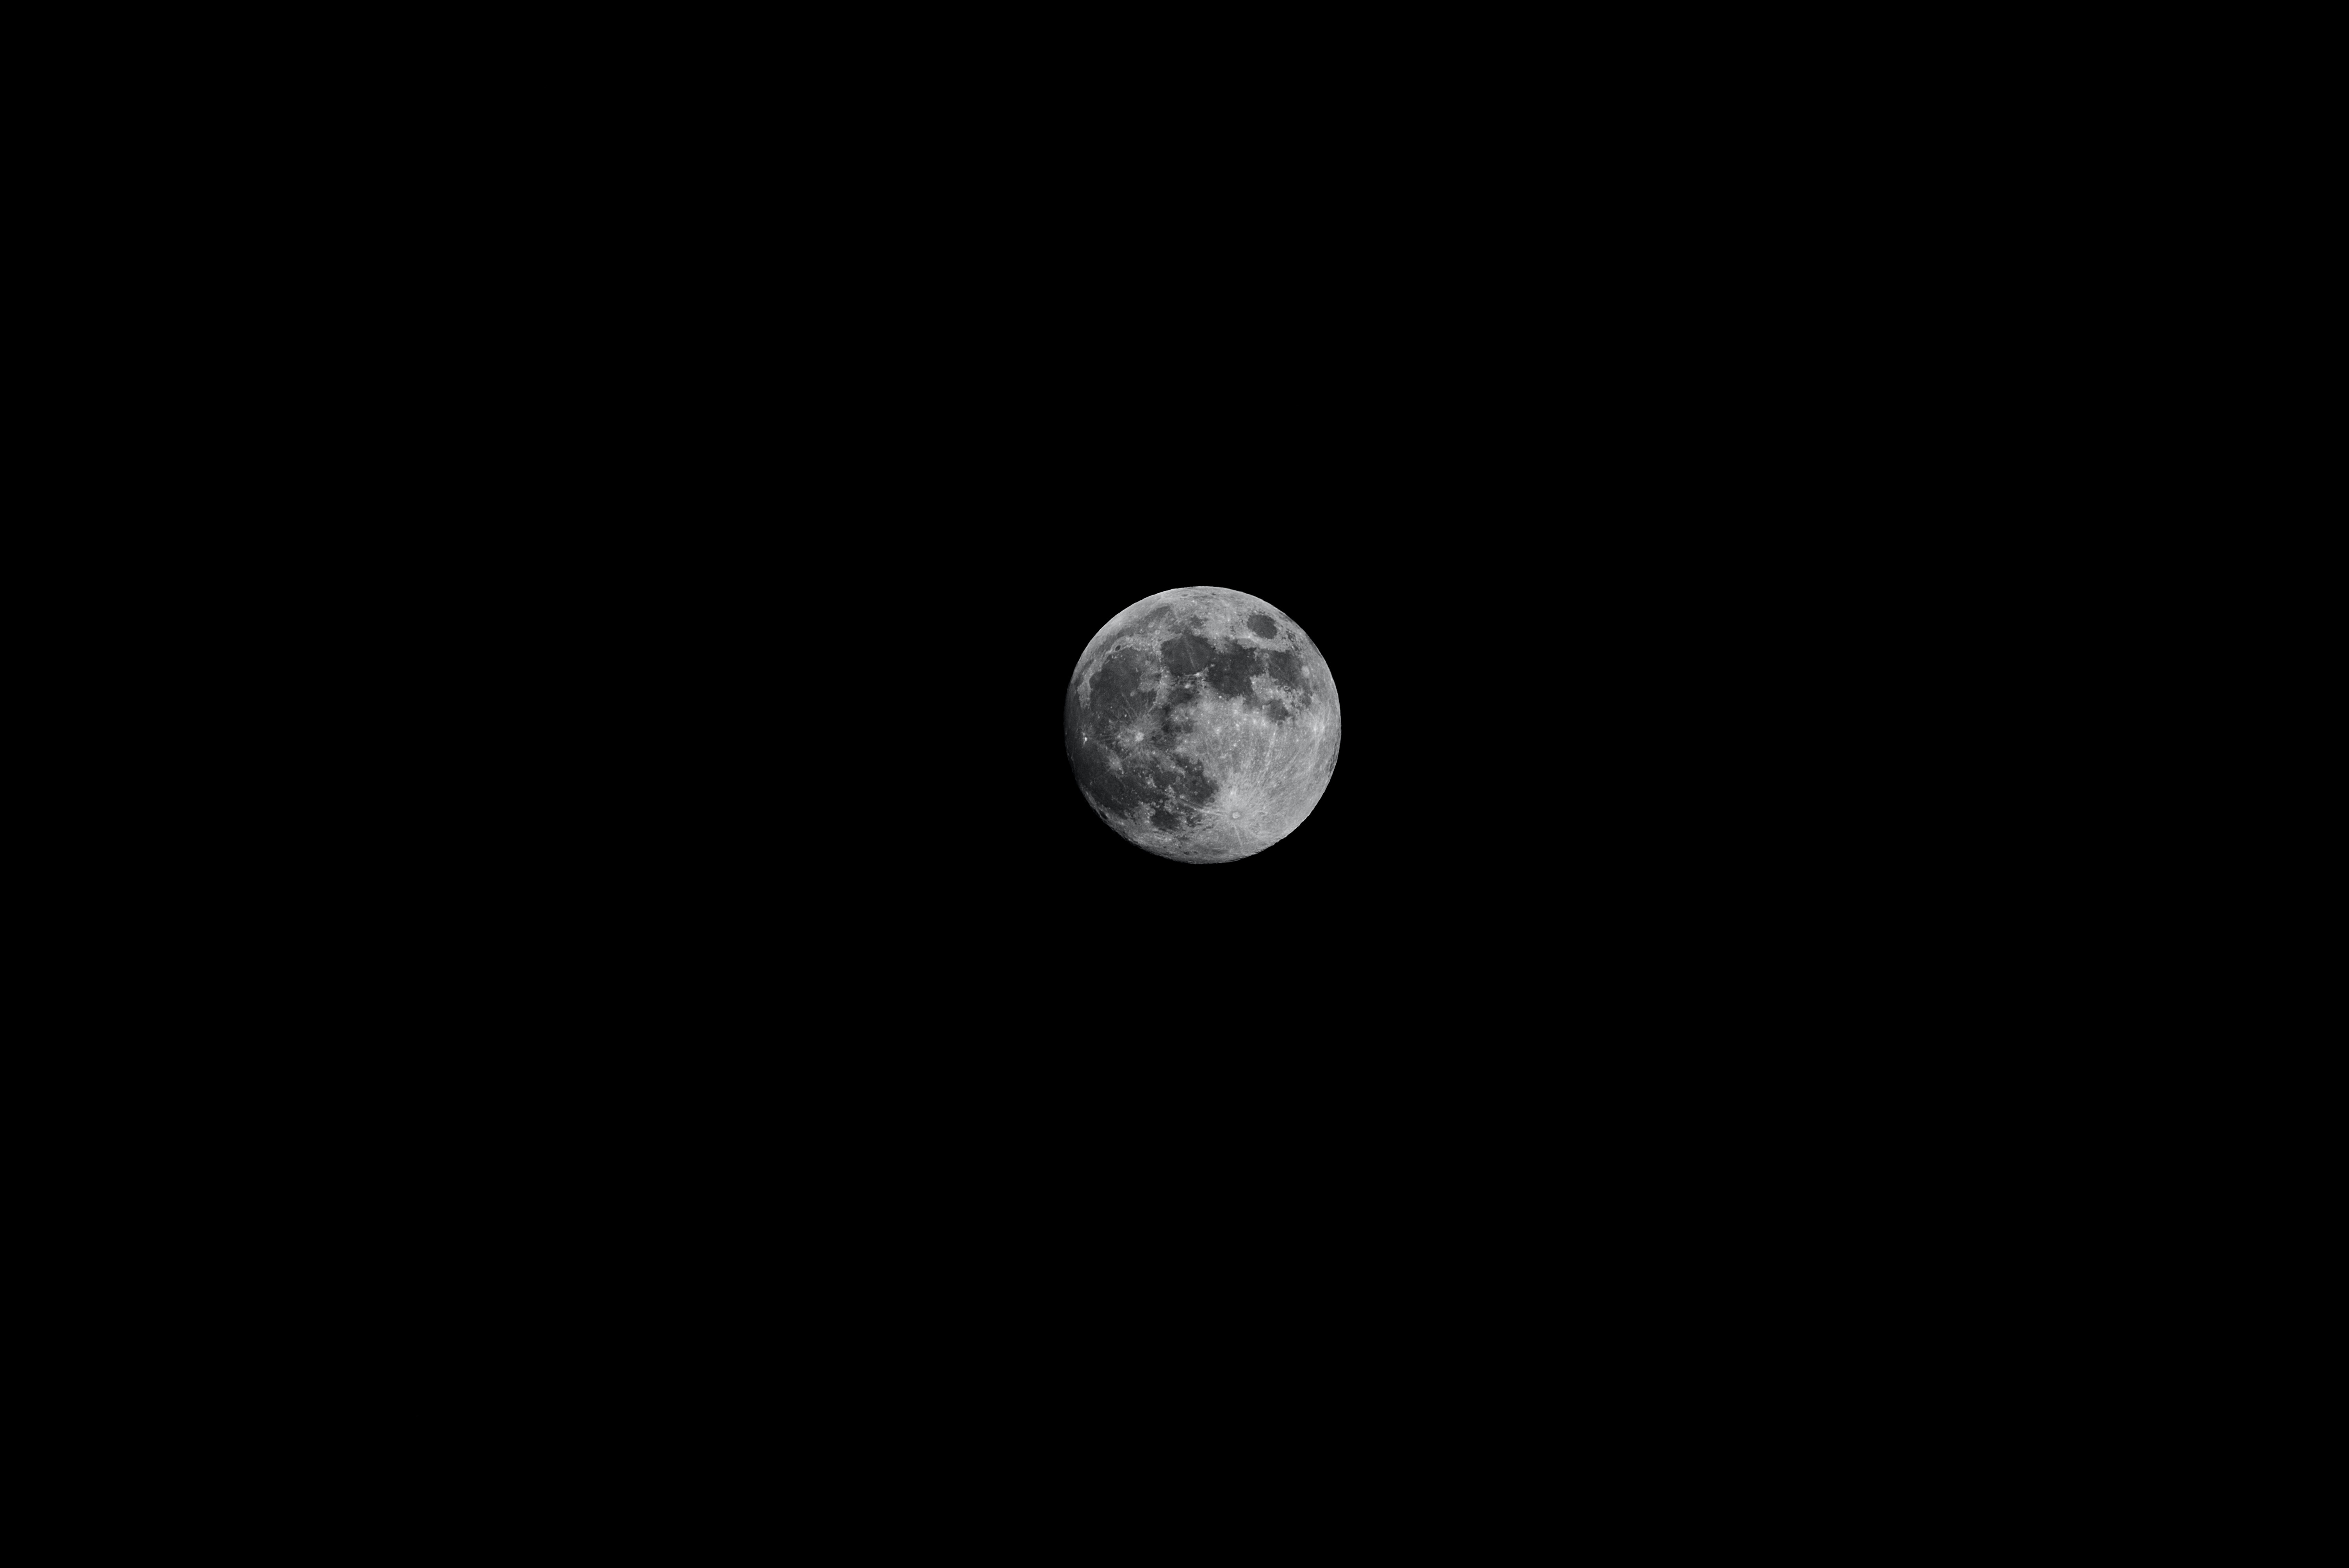 Earth's moon (photo credit: Mason Kimbarovsky via unsplash)